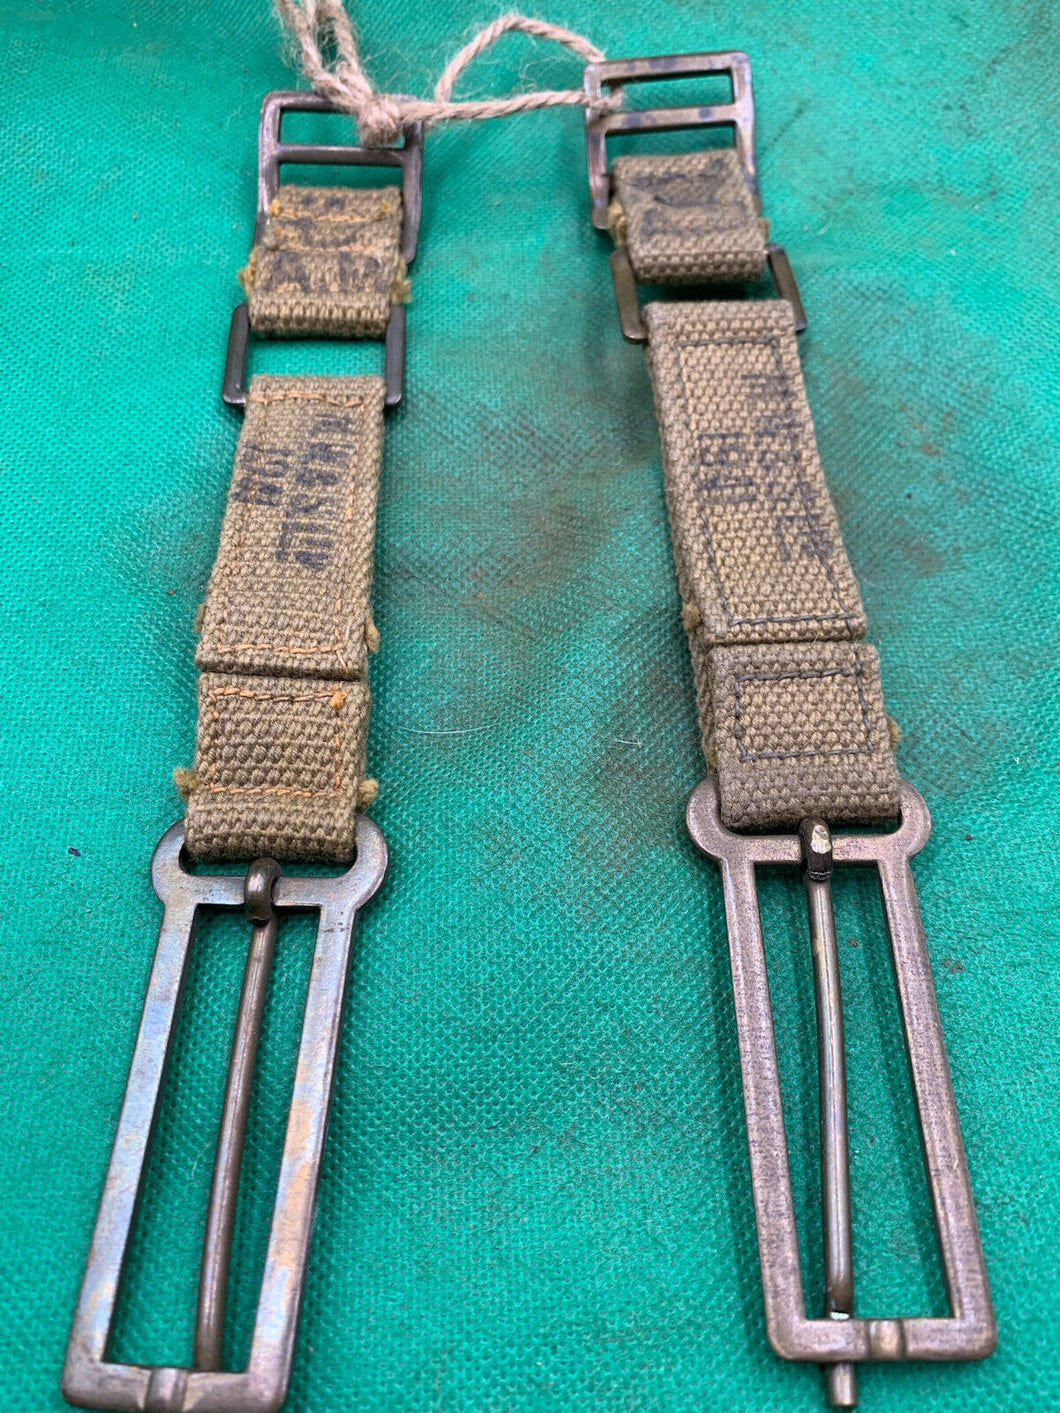 Original WW2 British Army 37 Pattern Brace Adaptors Pair - 1941 Dated